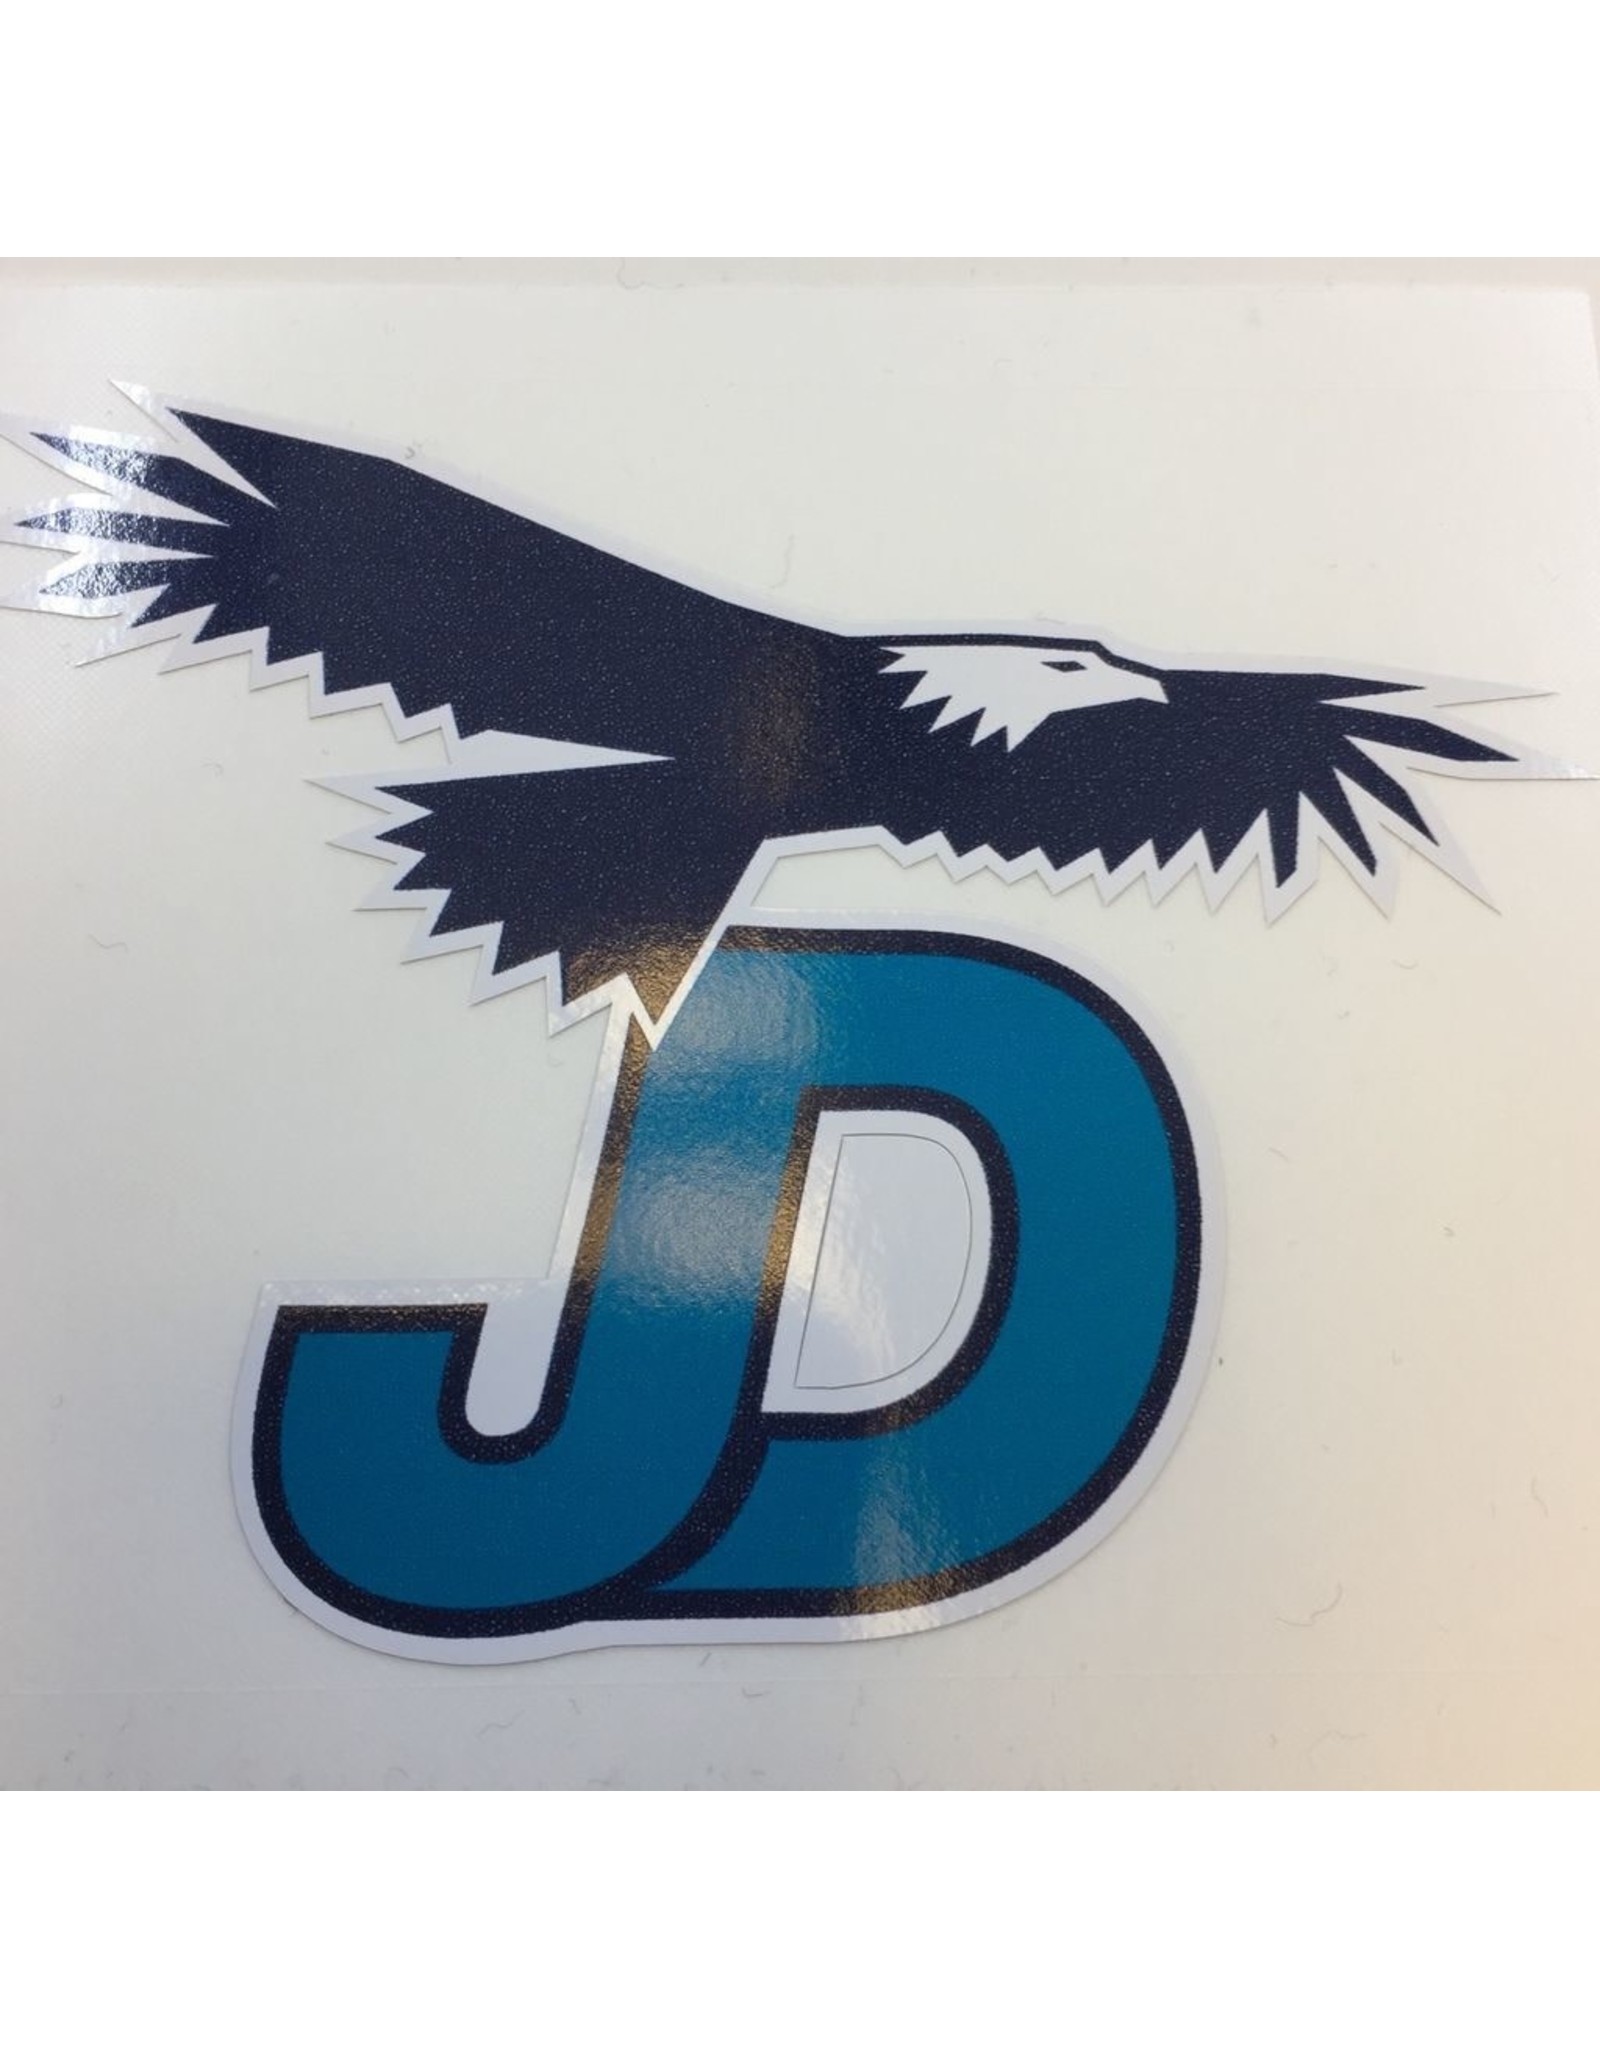 NON-UNIFORM JD Sticker - 3.625”x2.755” JD Eagle Die-cut decal